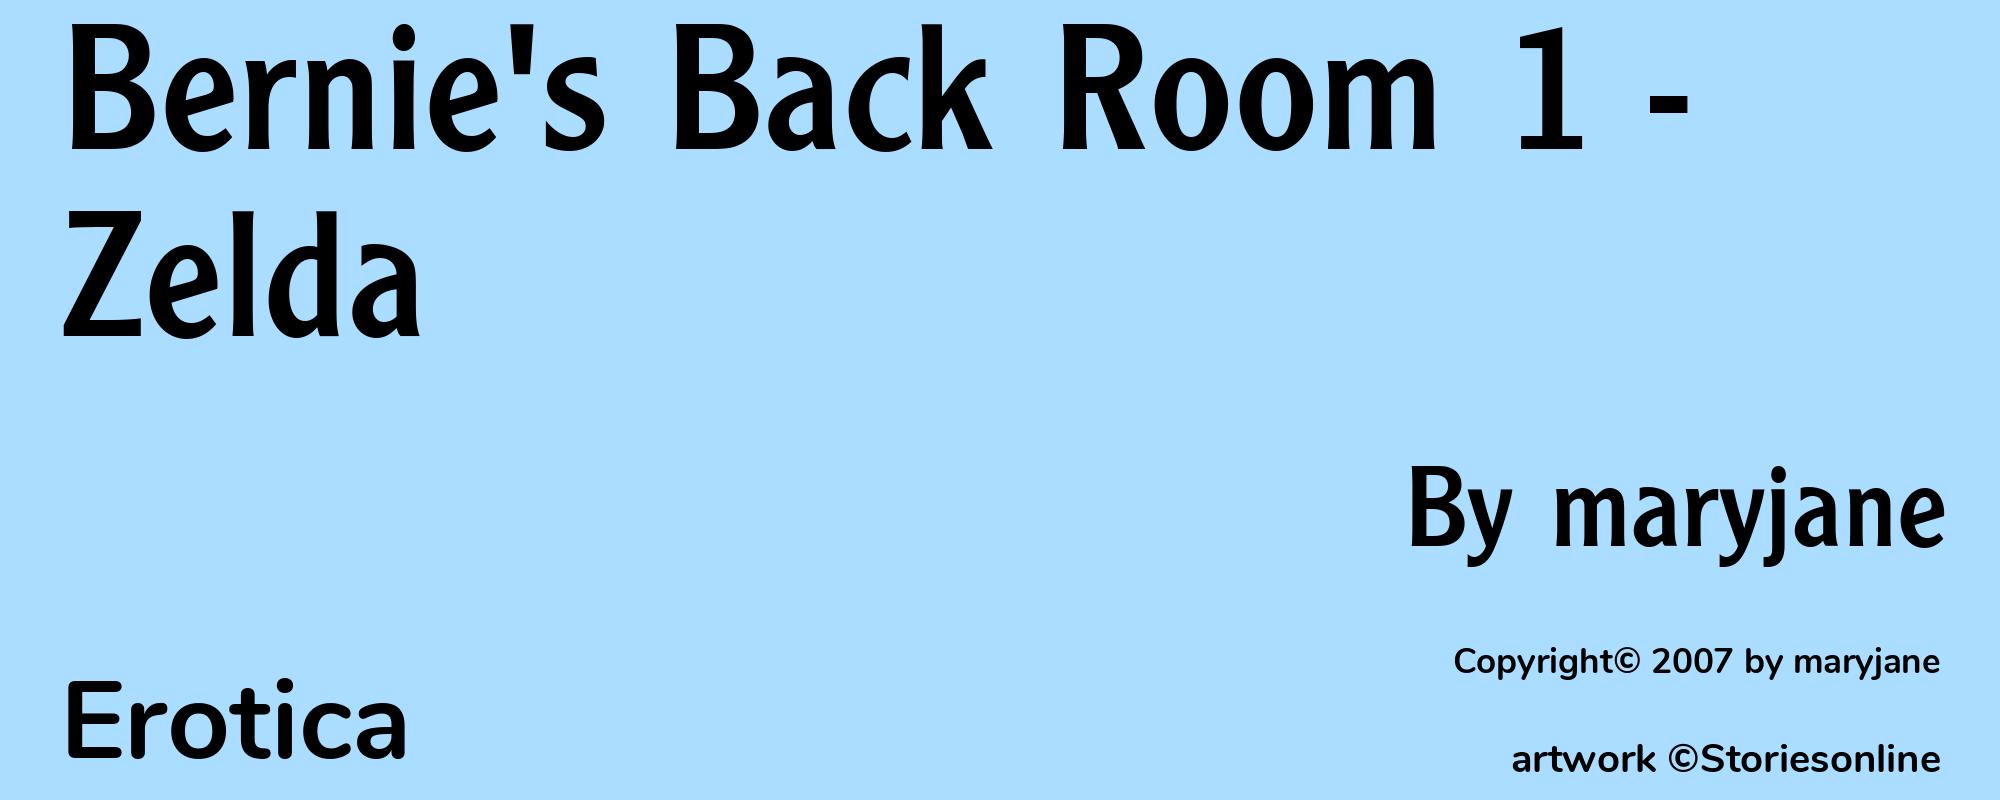 Bernie's Back Room 1 - Zelda - Cover